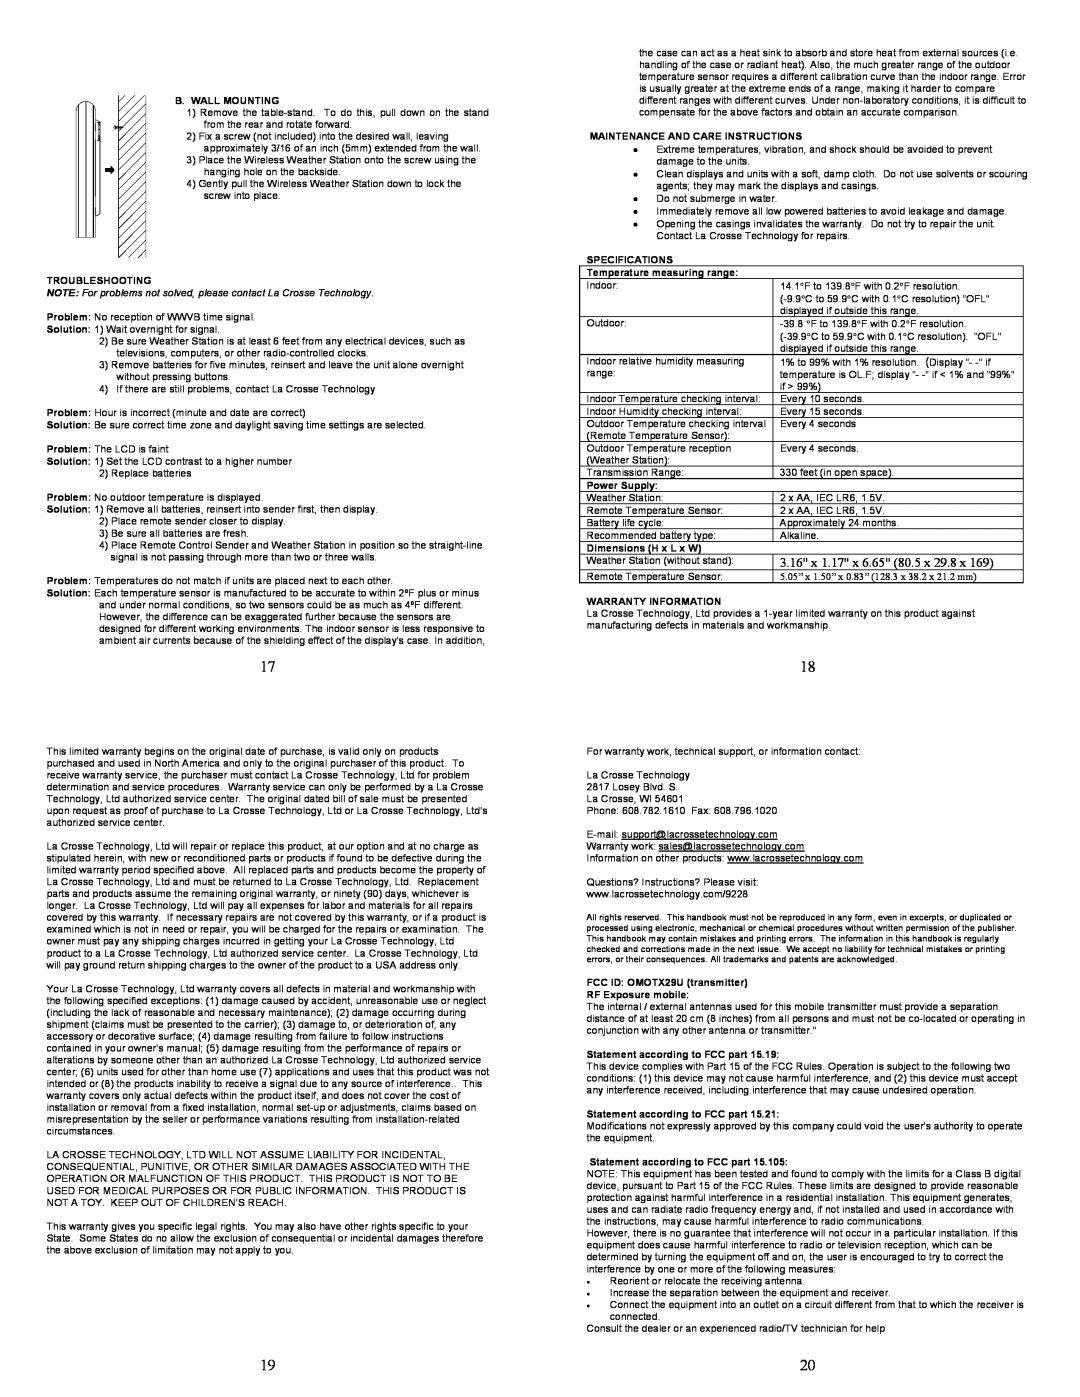 La Crosse Technology WS-9228U-IT instruction manual 3.16 x 1.17 x 6.65 80.5 x 29.8, B. Wall Mounting 